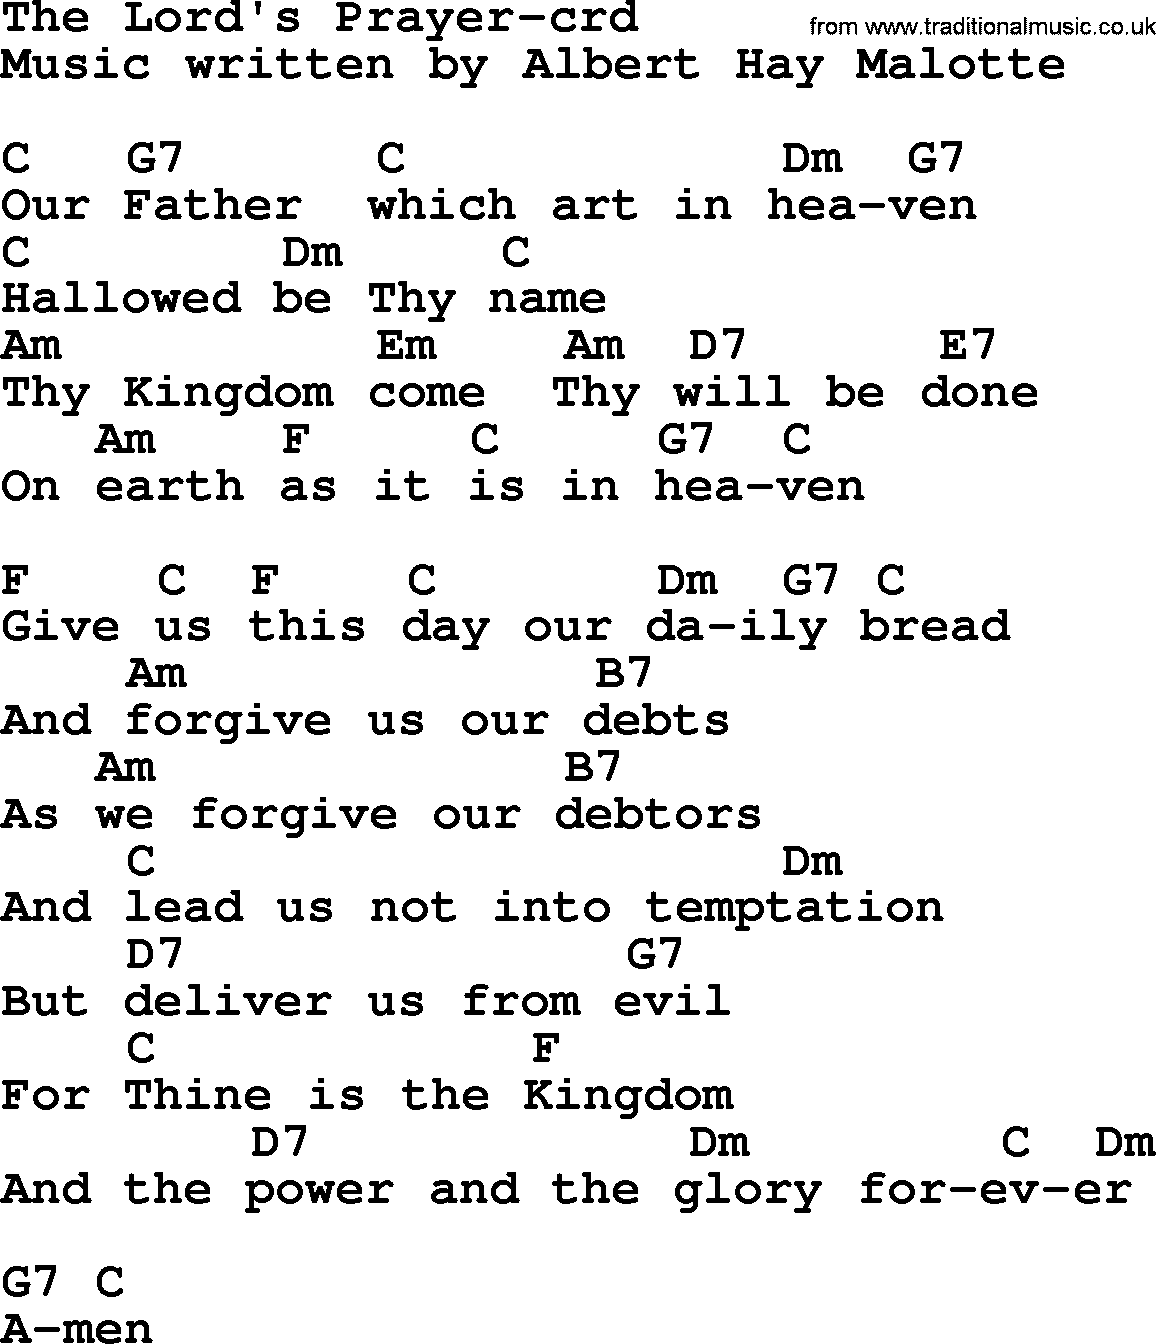 Top 500 Hymn: The Lord's Prayer, lyrics and chords